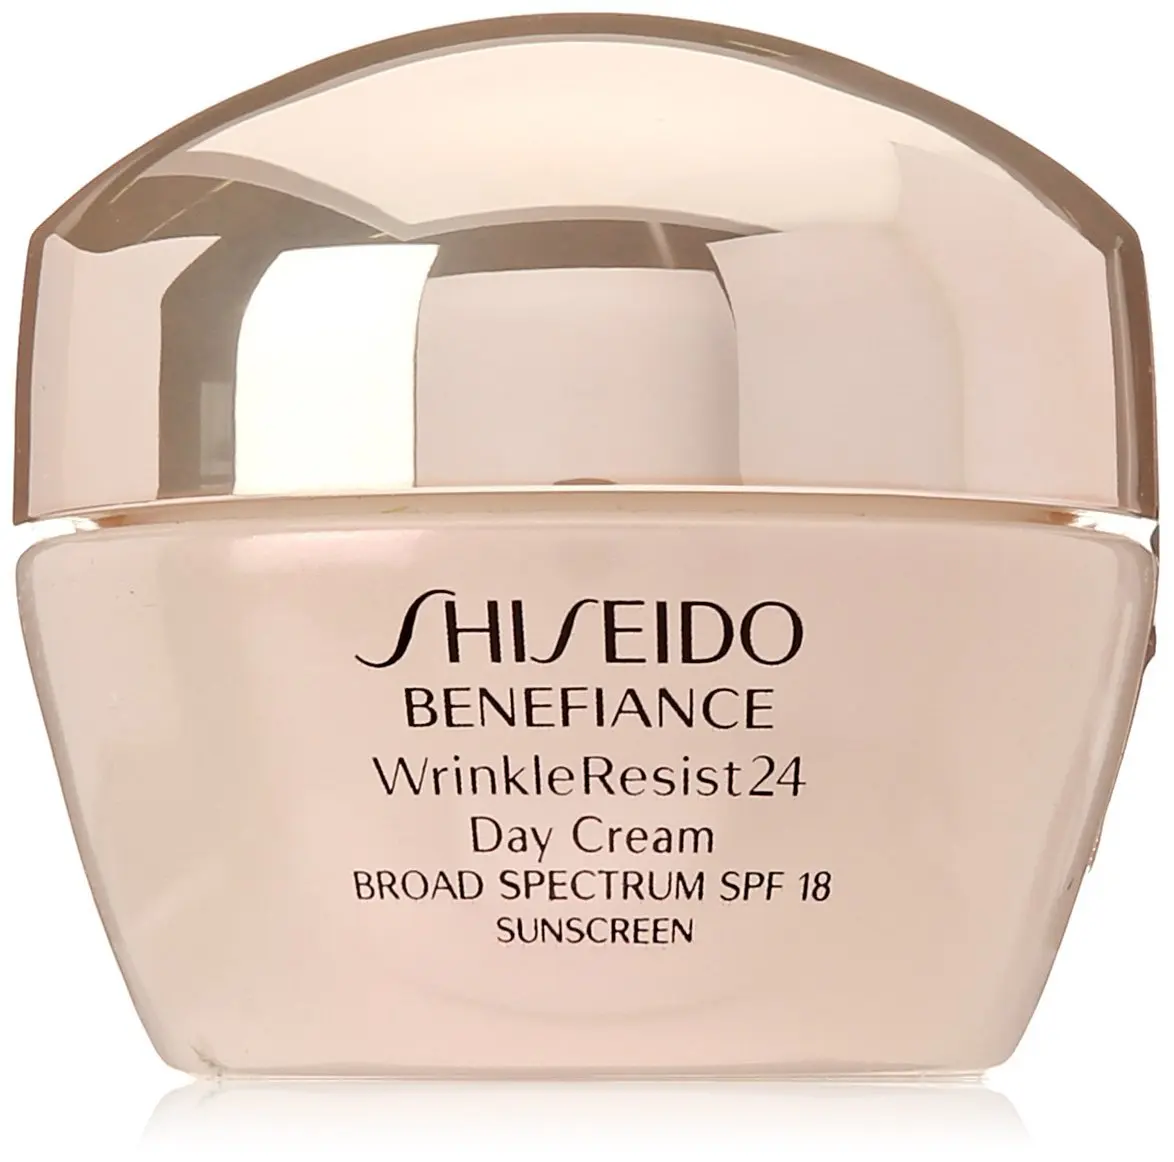 Shiseido Benefiance wrinkleresist24 Day Cream. Shiseido Benefiance wrinkleresist24 Day Emulsion. Крем wrinkleresist24 от Shiseido. Шисейдо Бенефианс Вринкле ресист 24. Shiseido benefiance wrinkle